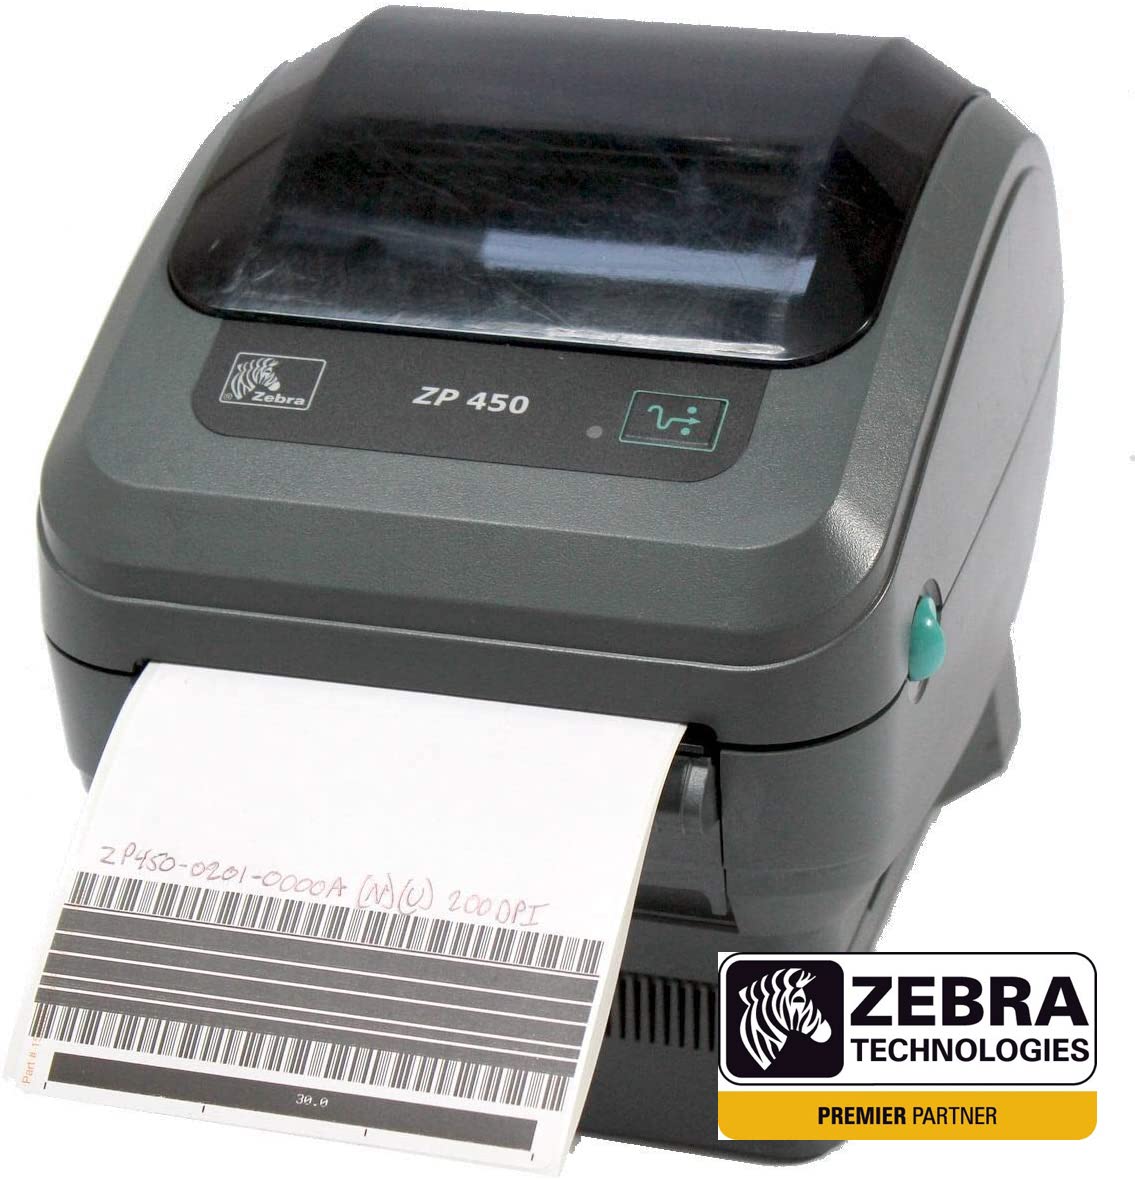 vegetation svar Army Zebra ZP450 CTP UPS Thermal Label Printer - WorldShip Ready